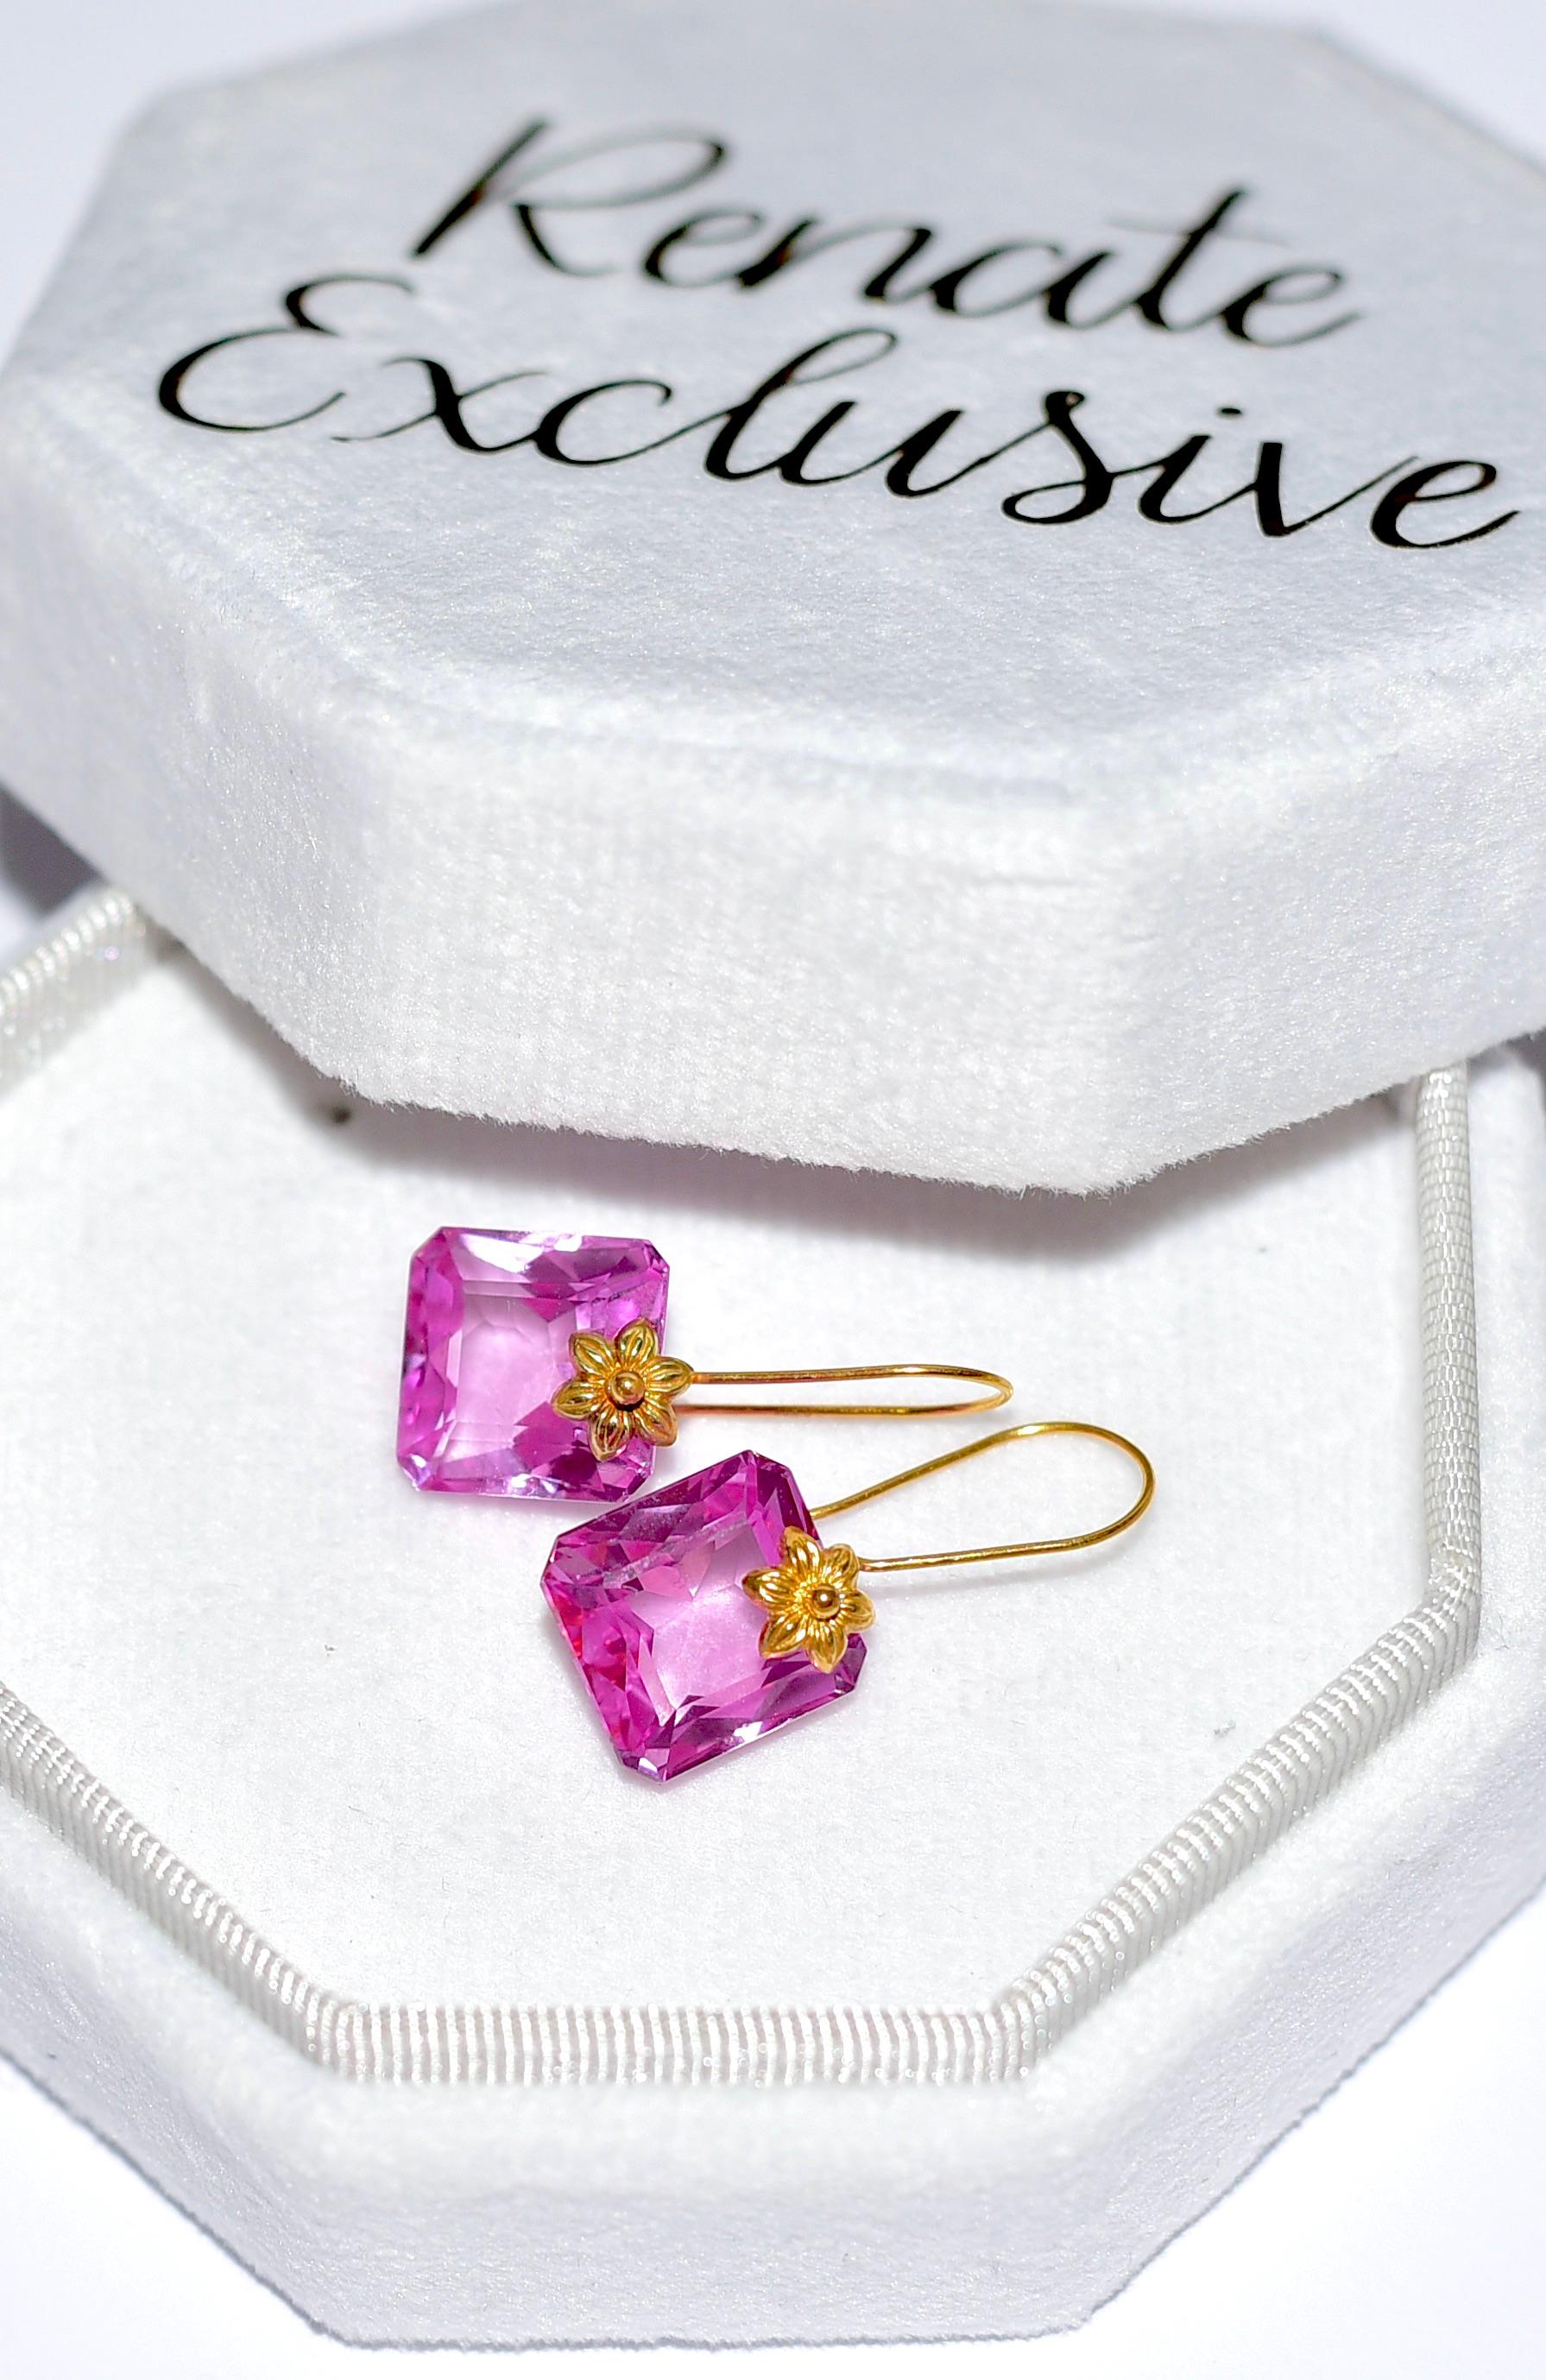 Baguette Cut Pink Sapphire Earrings in 18K Solid Yellow Gold